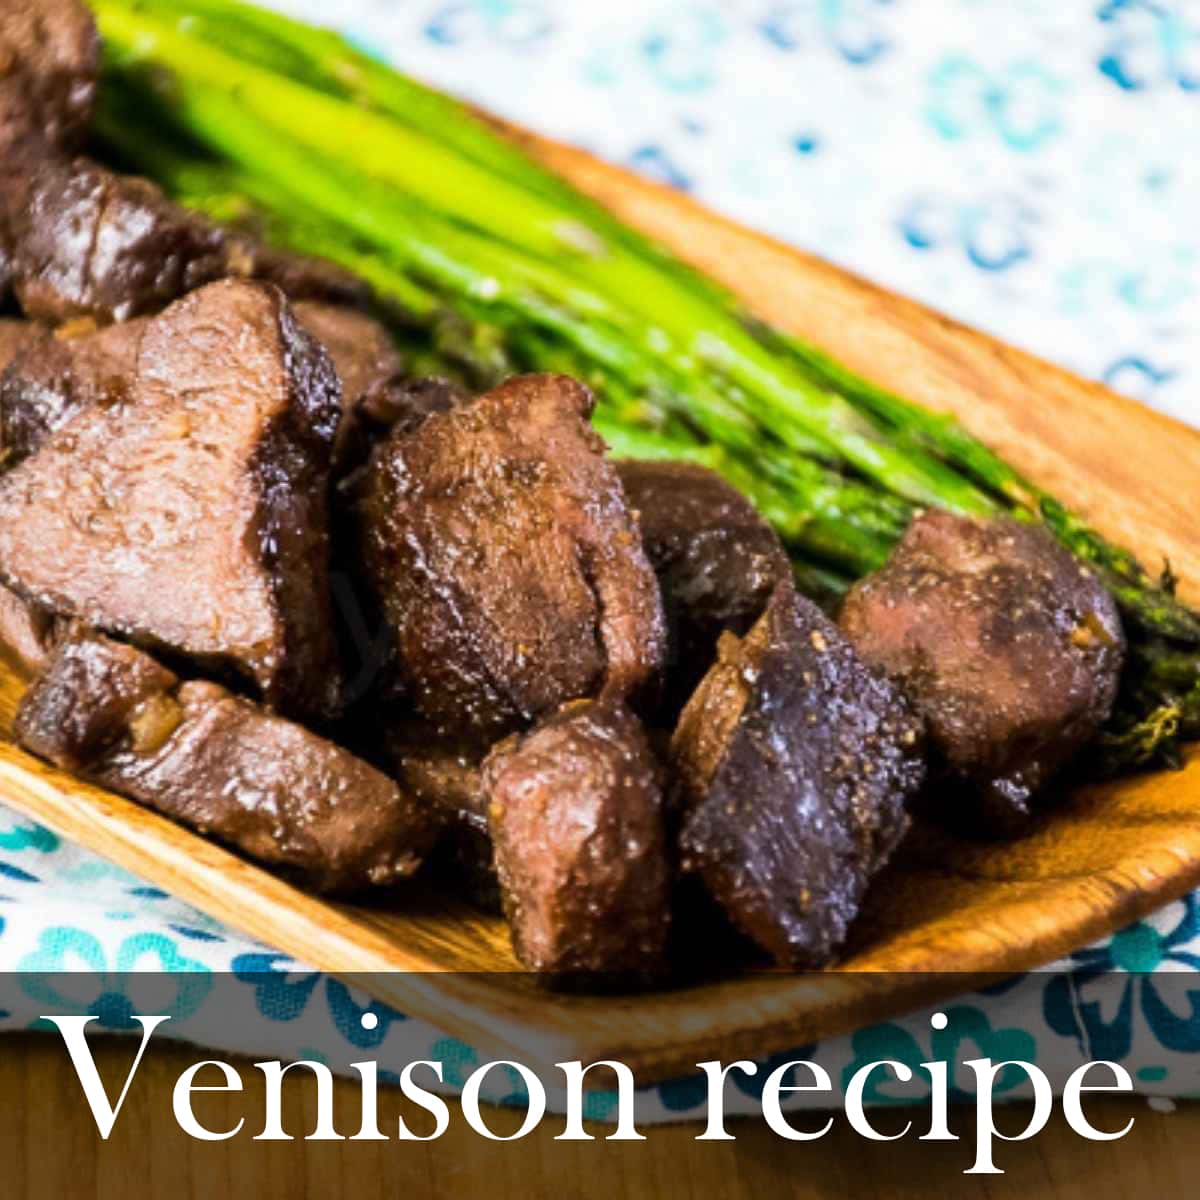 Venison recipe